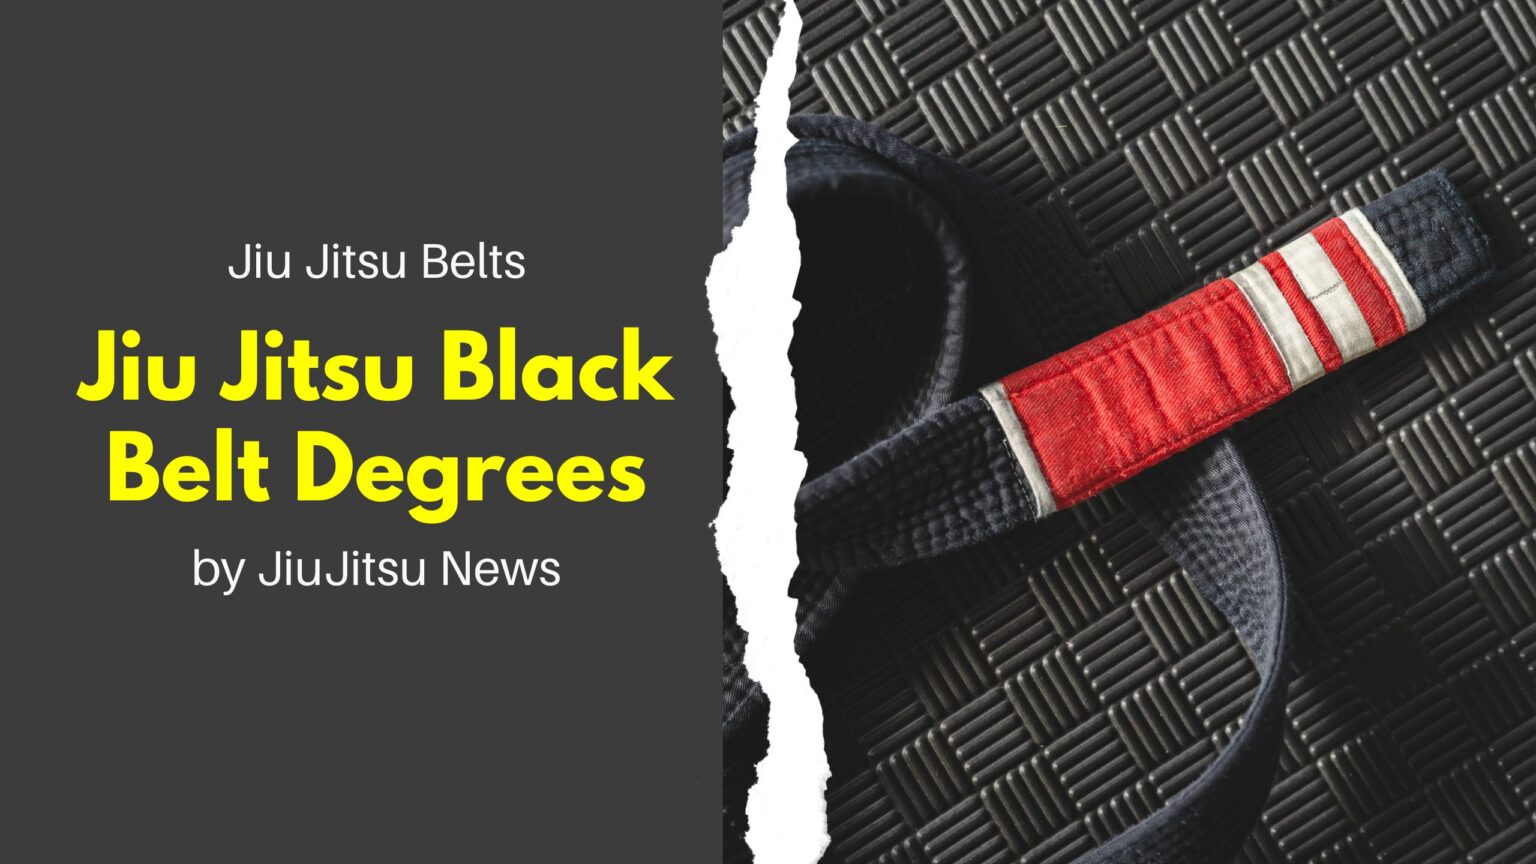 black belt degrees in jiu jitsu Archives - Jiujitsu News